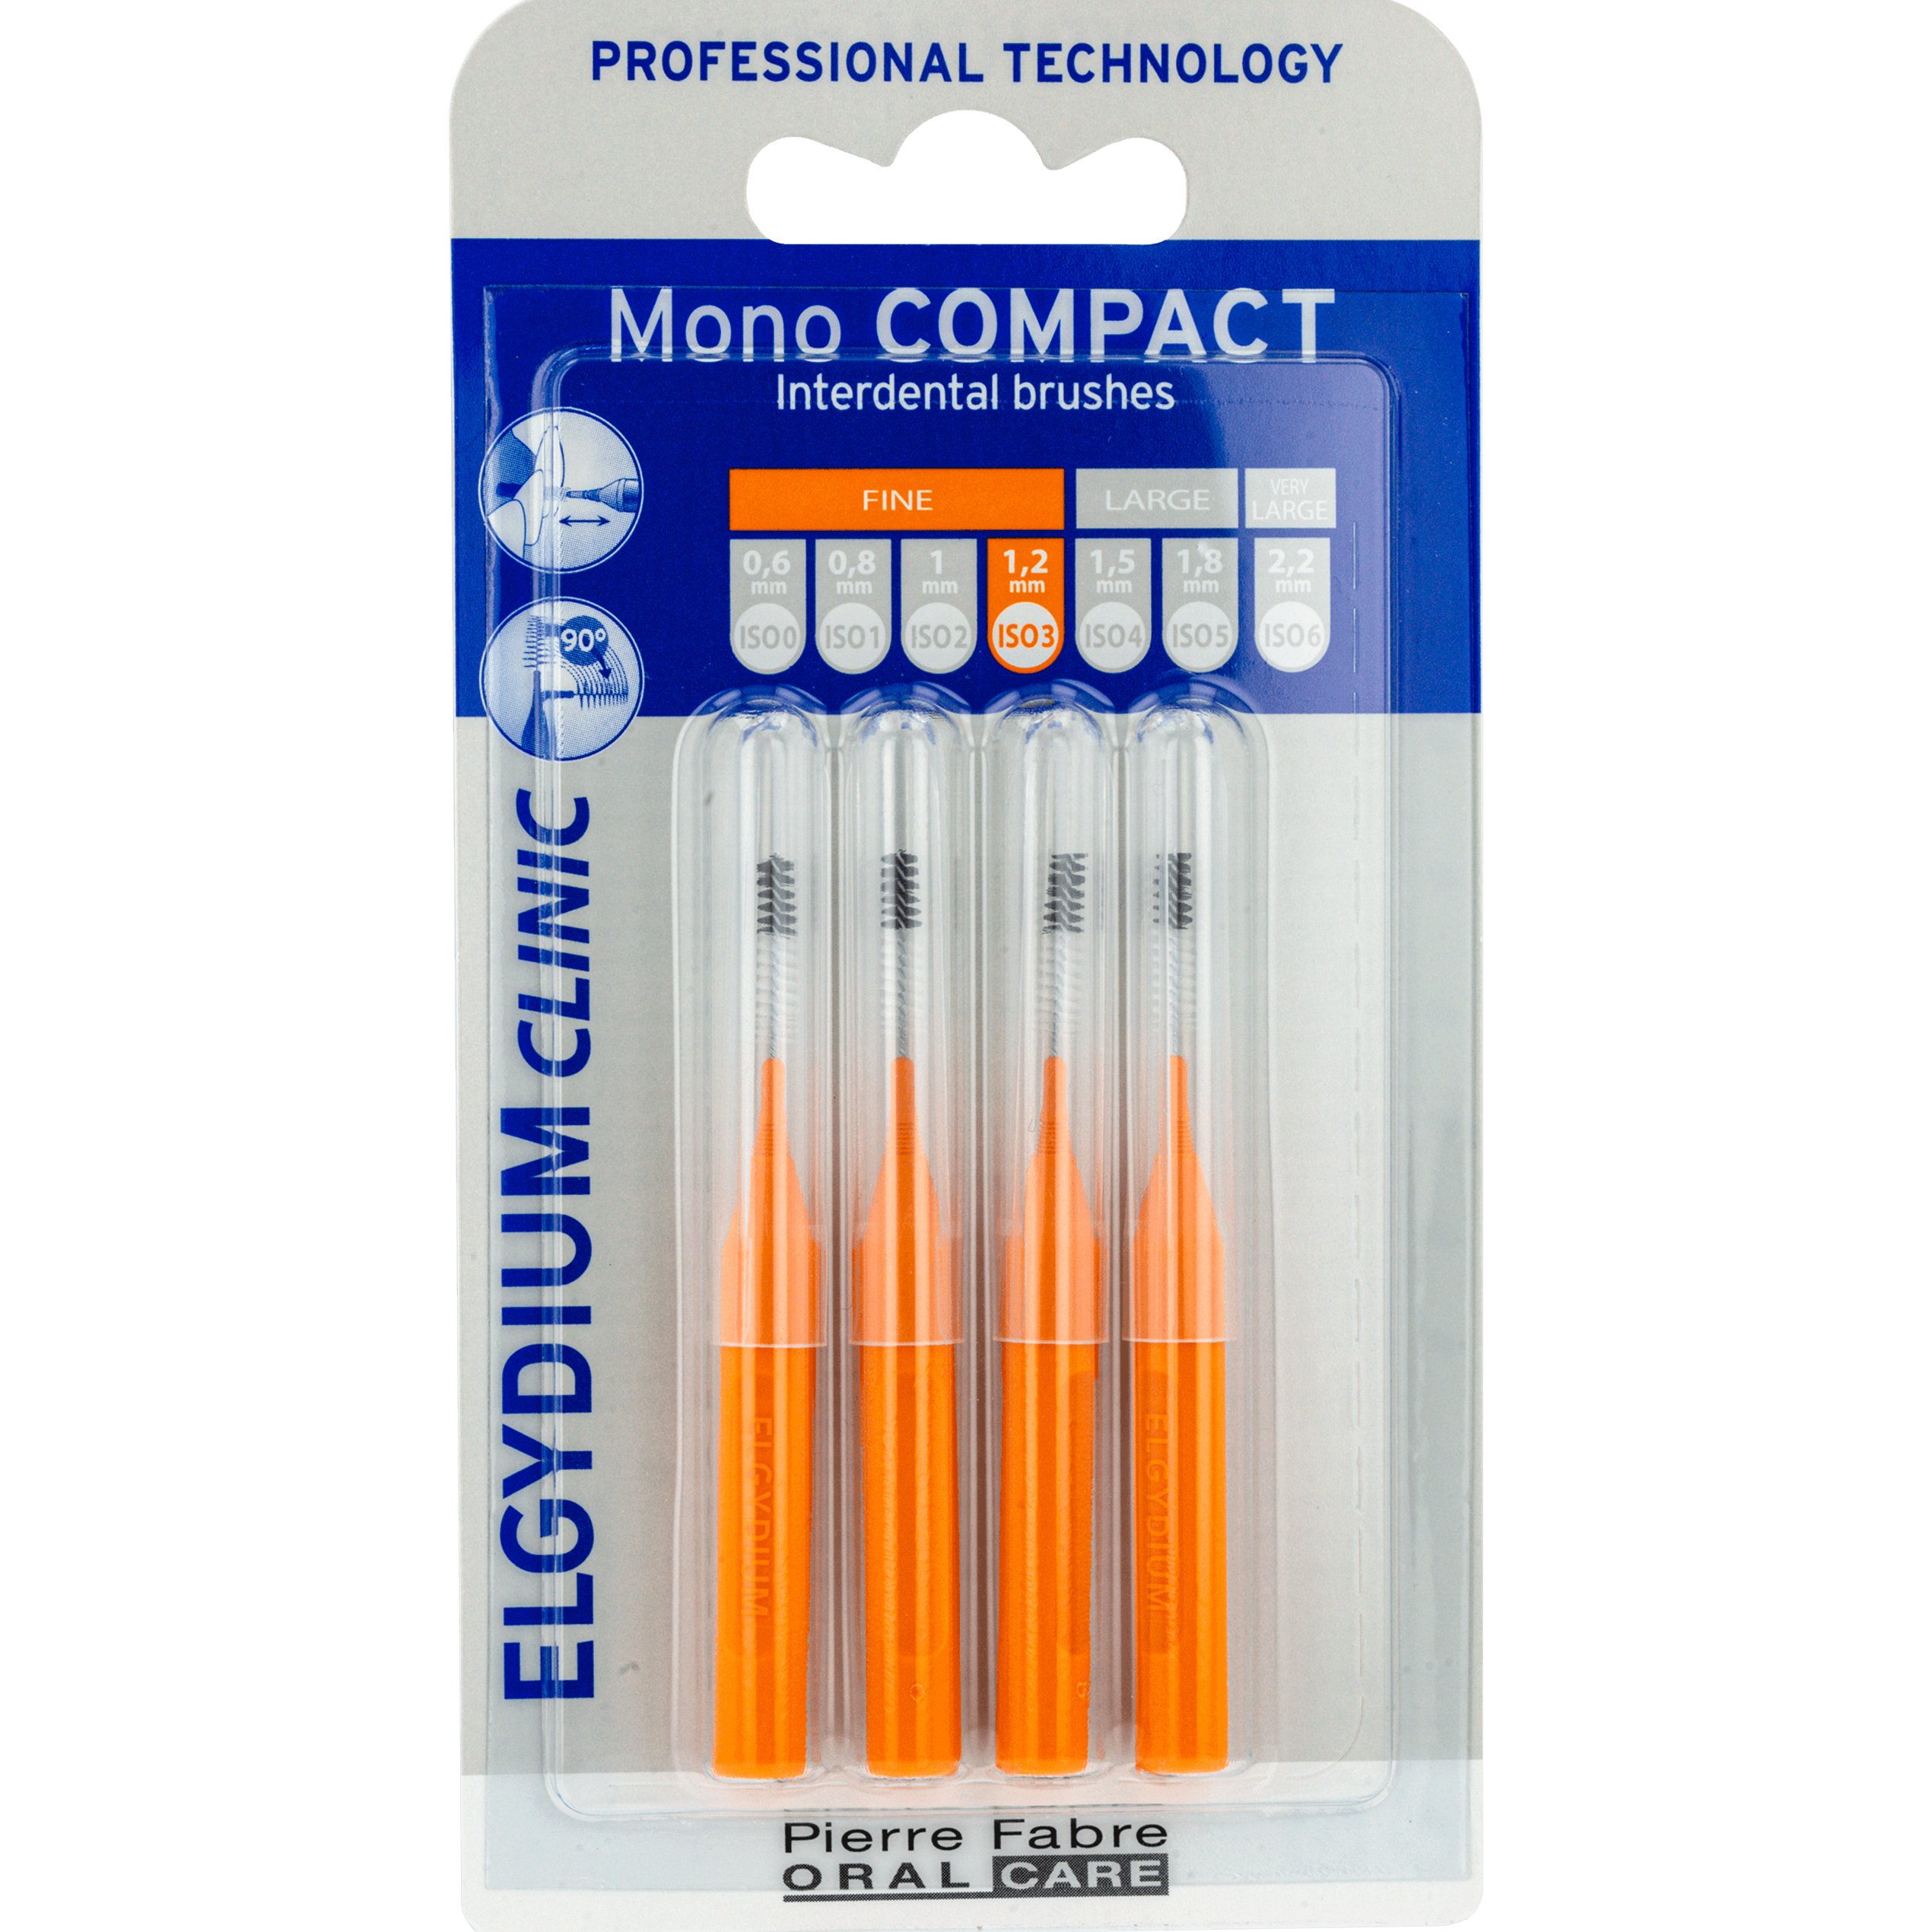 Elgydium Clinic Mono Compact Interdental Brushes 0.6mm Μεσοδόντια Βουρτσάκια Ιδανικά για Άτομα με Εμφυτεύματα ή Σιδεράκια 4 Τεμάχια